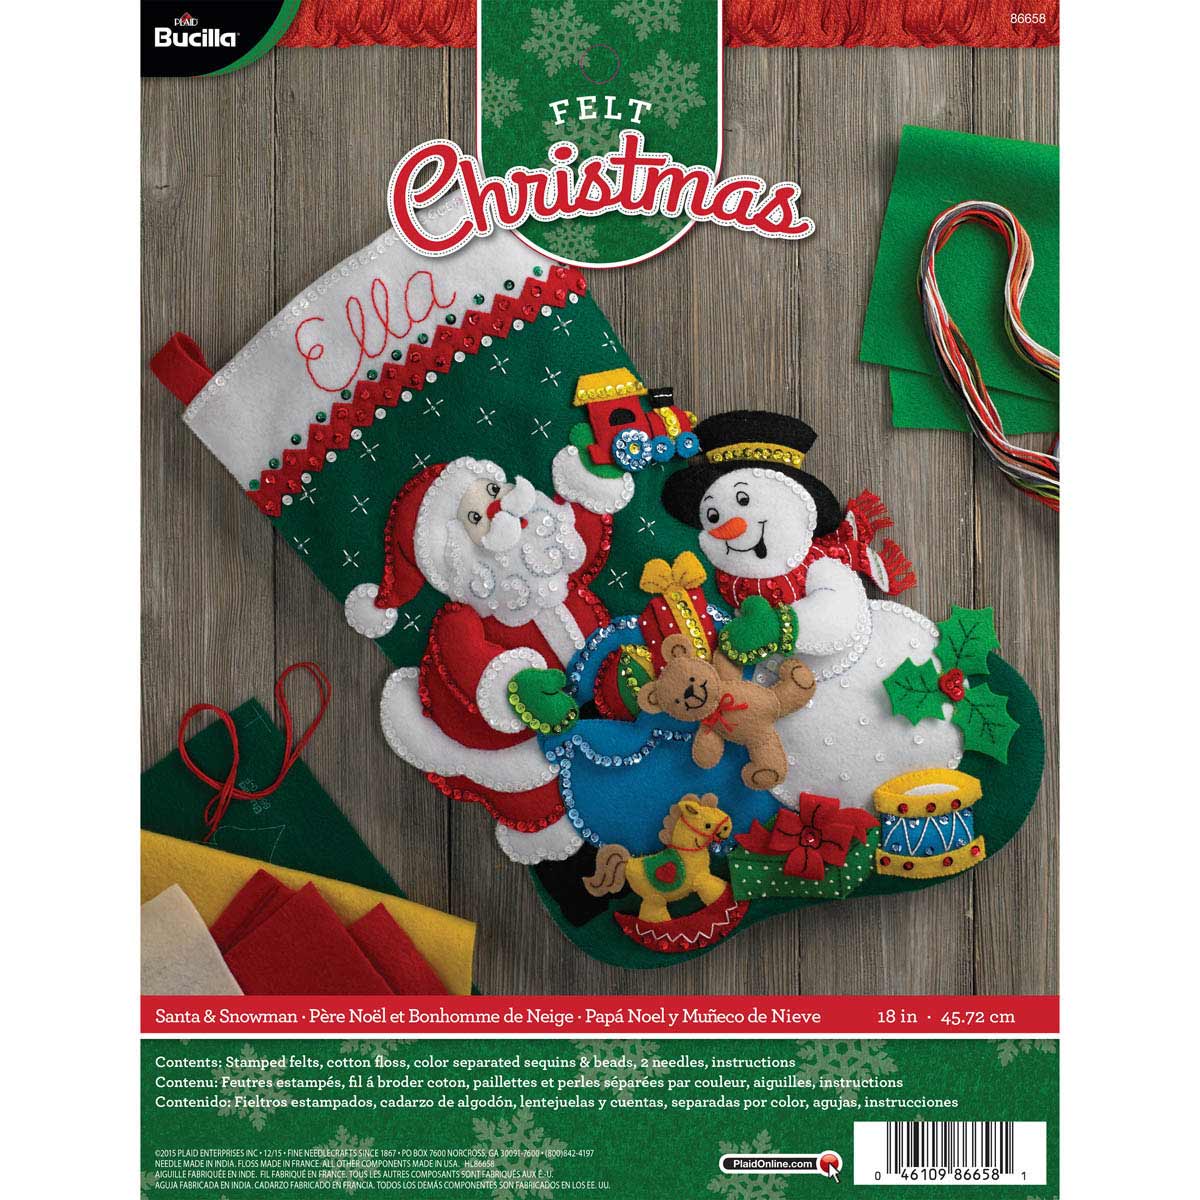 NOS Bucilla Christmas Stocking Kit Jolly Beaded Santa 18” Felt